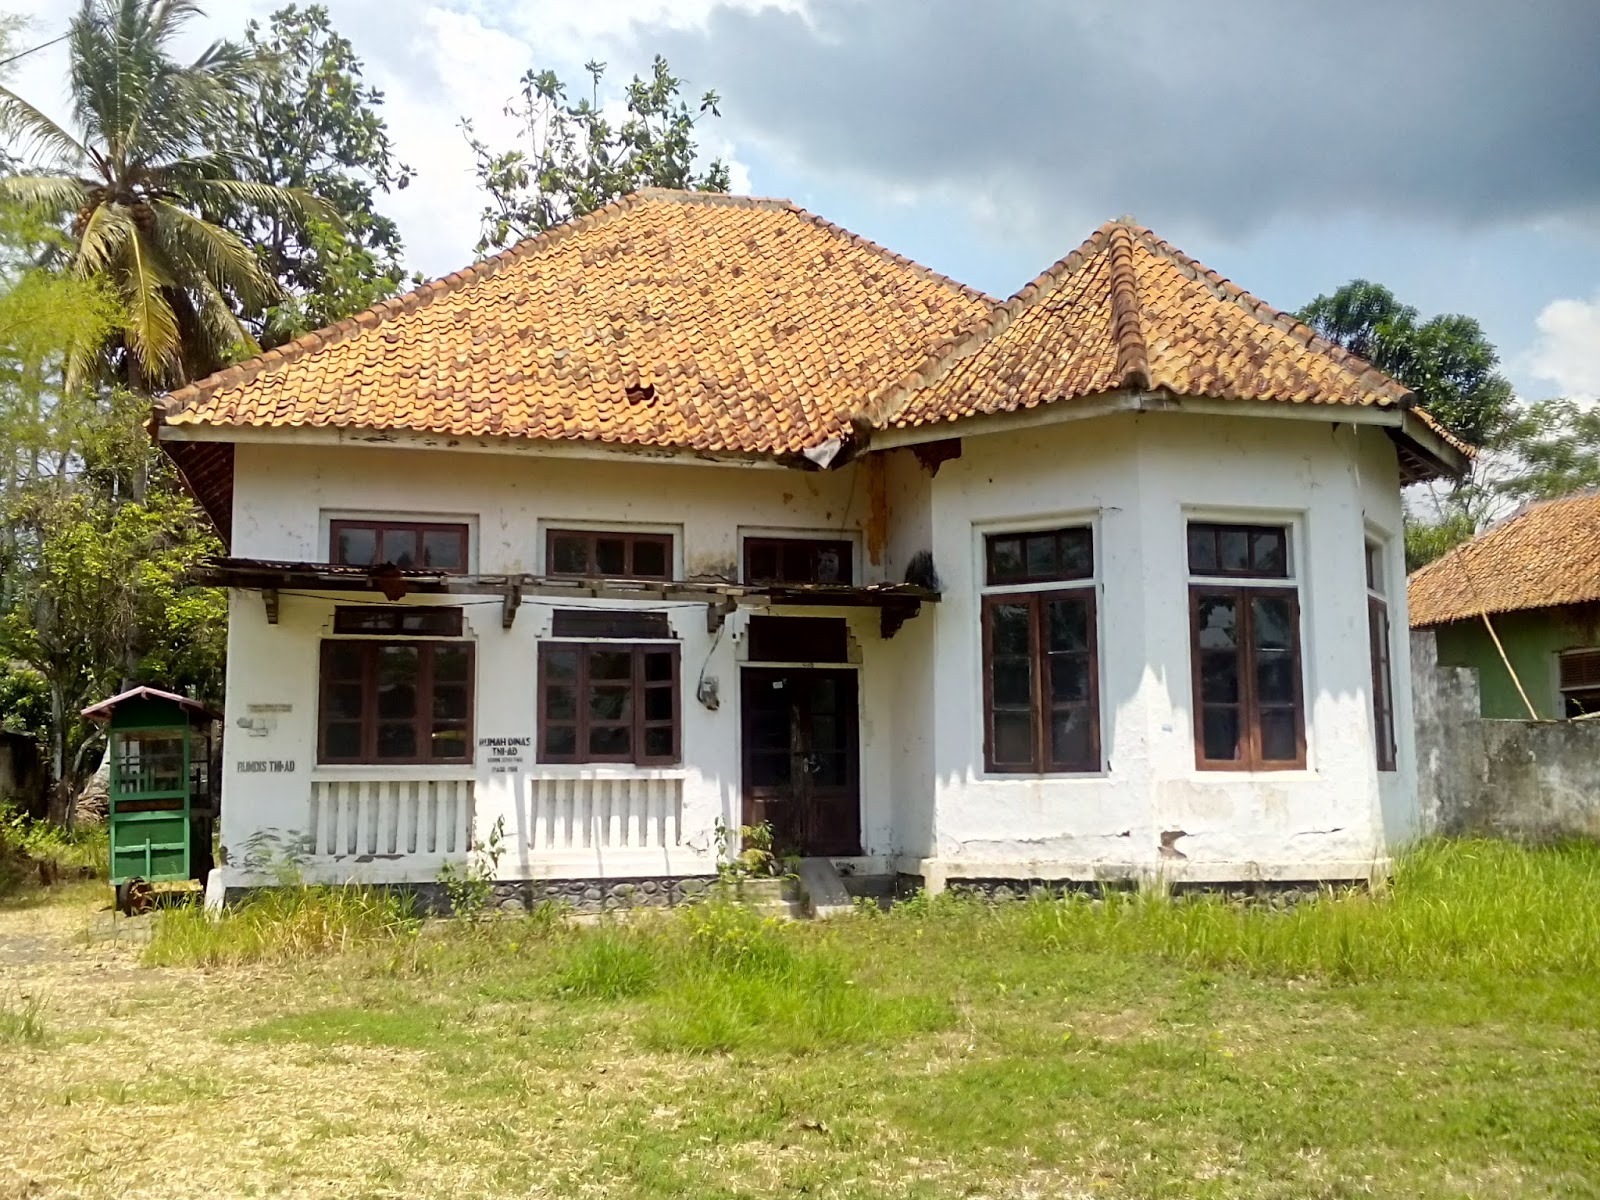  Rumah rumah bergaya kolonial dari berbagai penjuru 